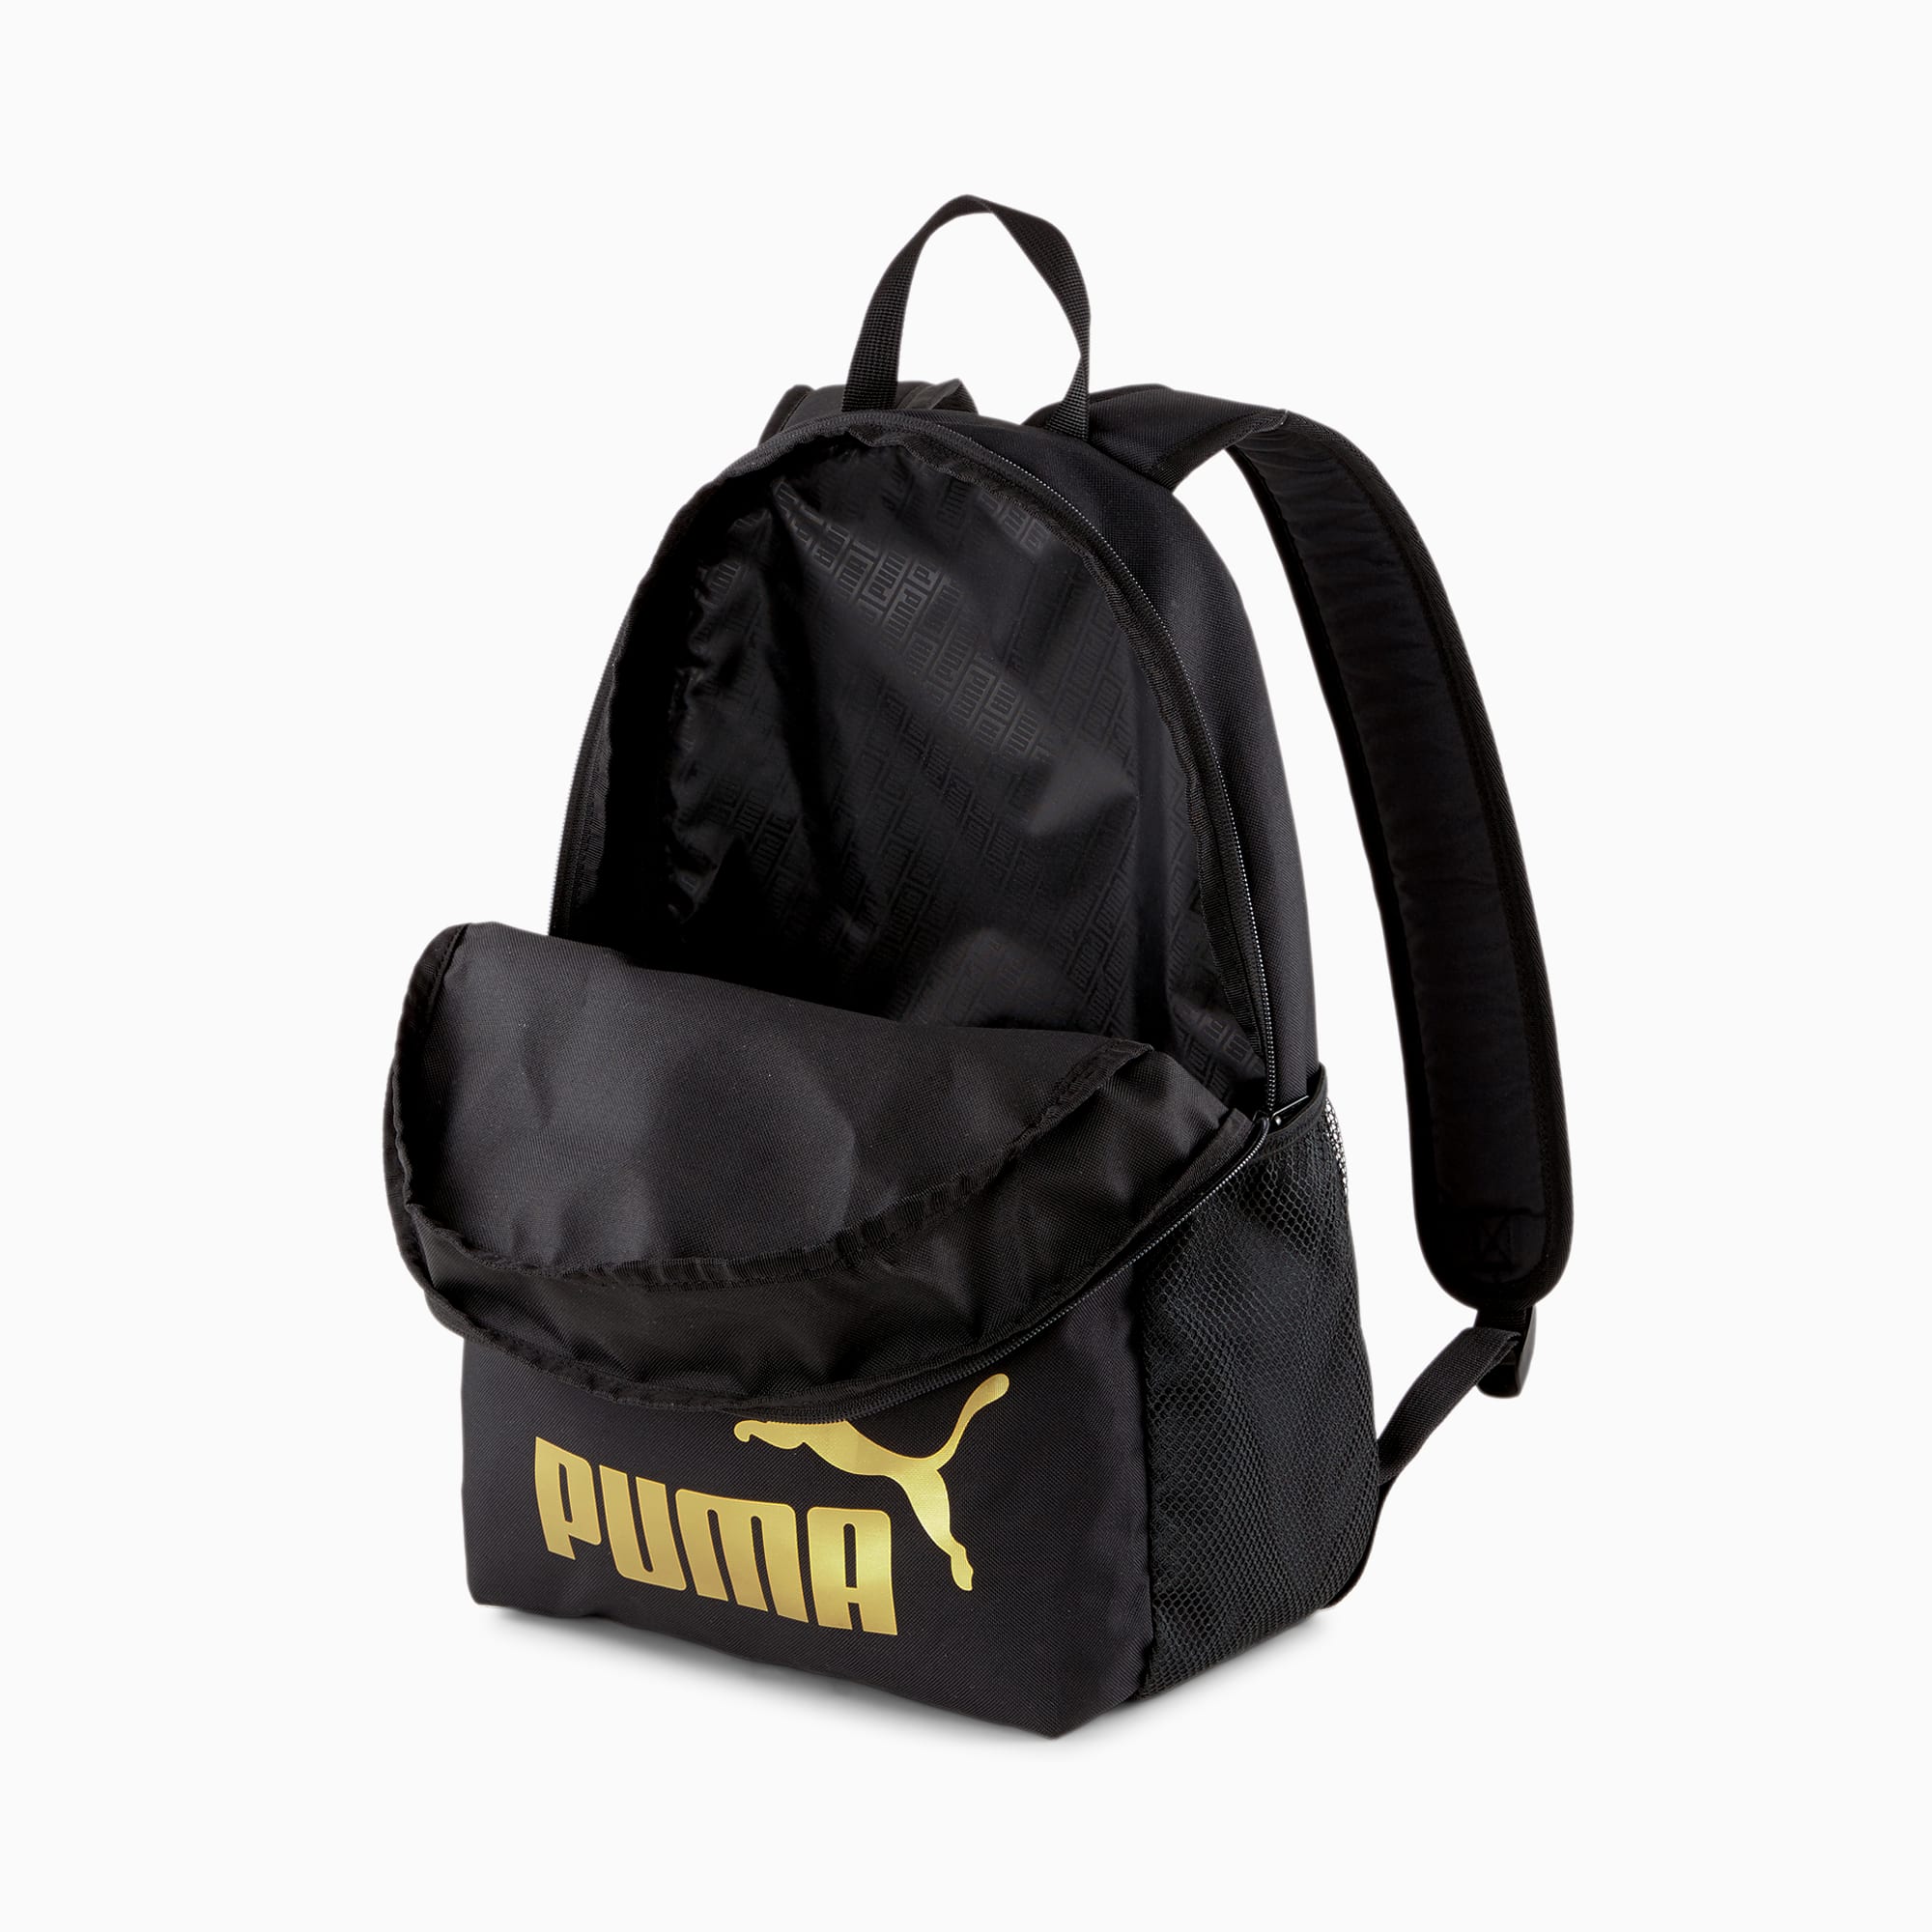 Backpack PUMA Phase Backpack 075487 49 Puma Black Golden Logo, UhfmrShops